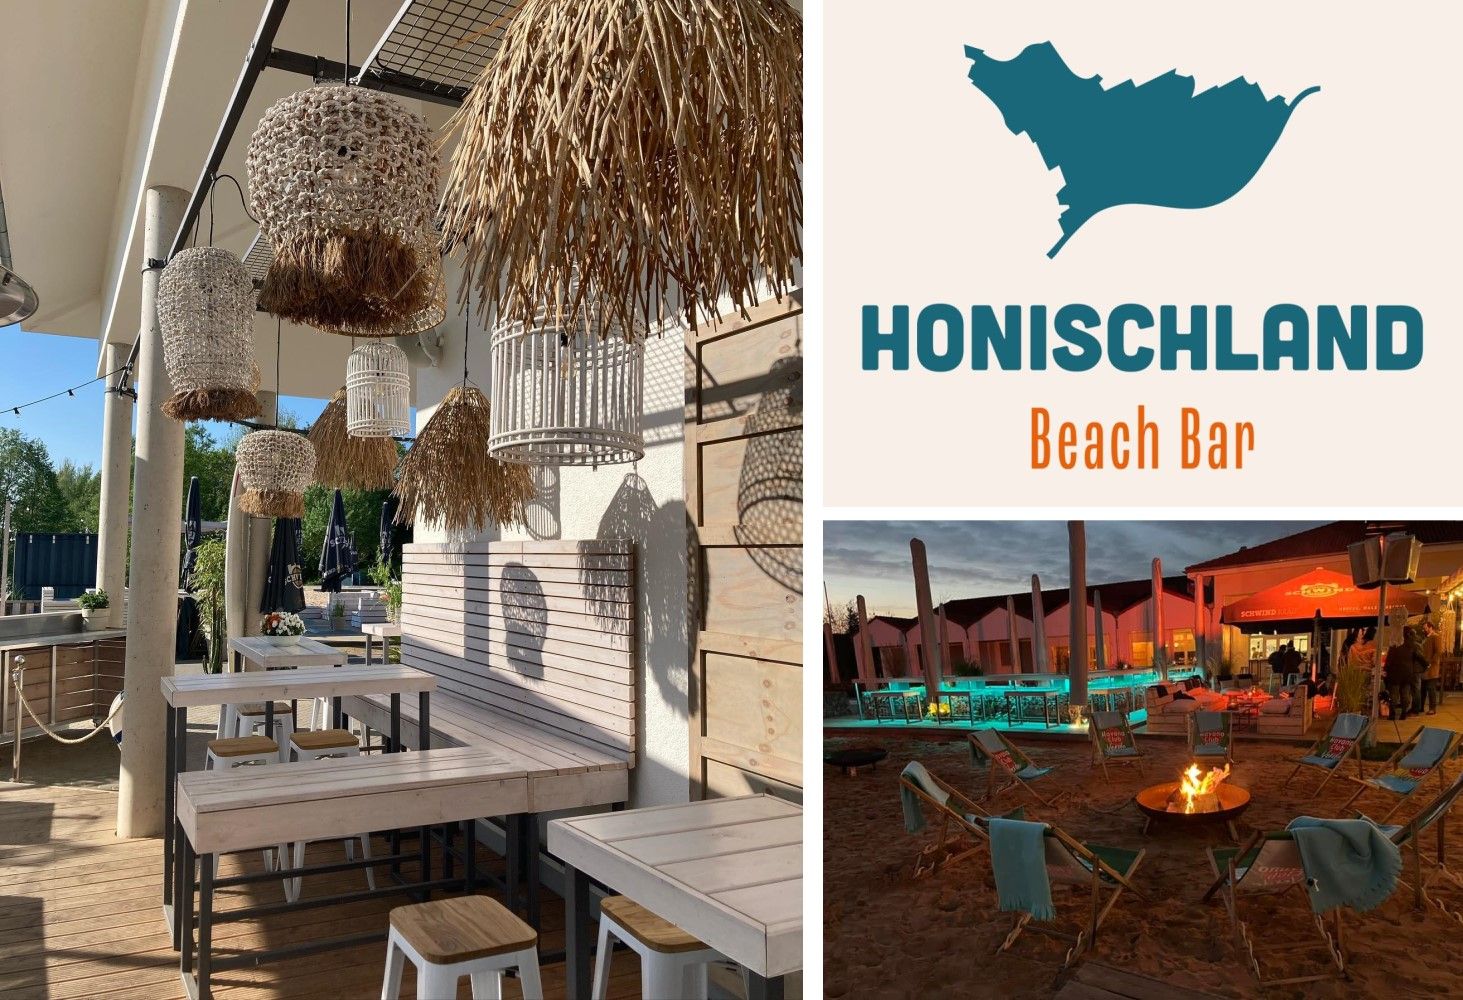 Beach Bar Honischland